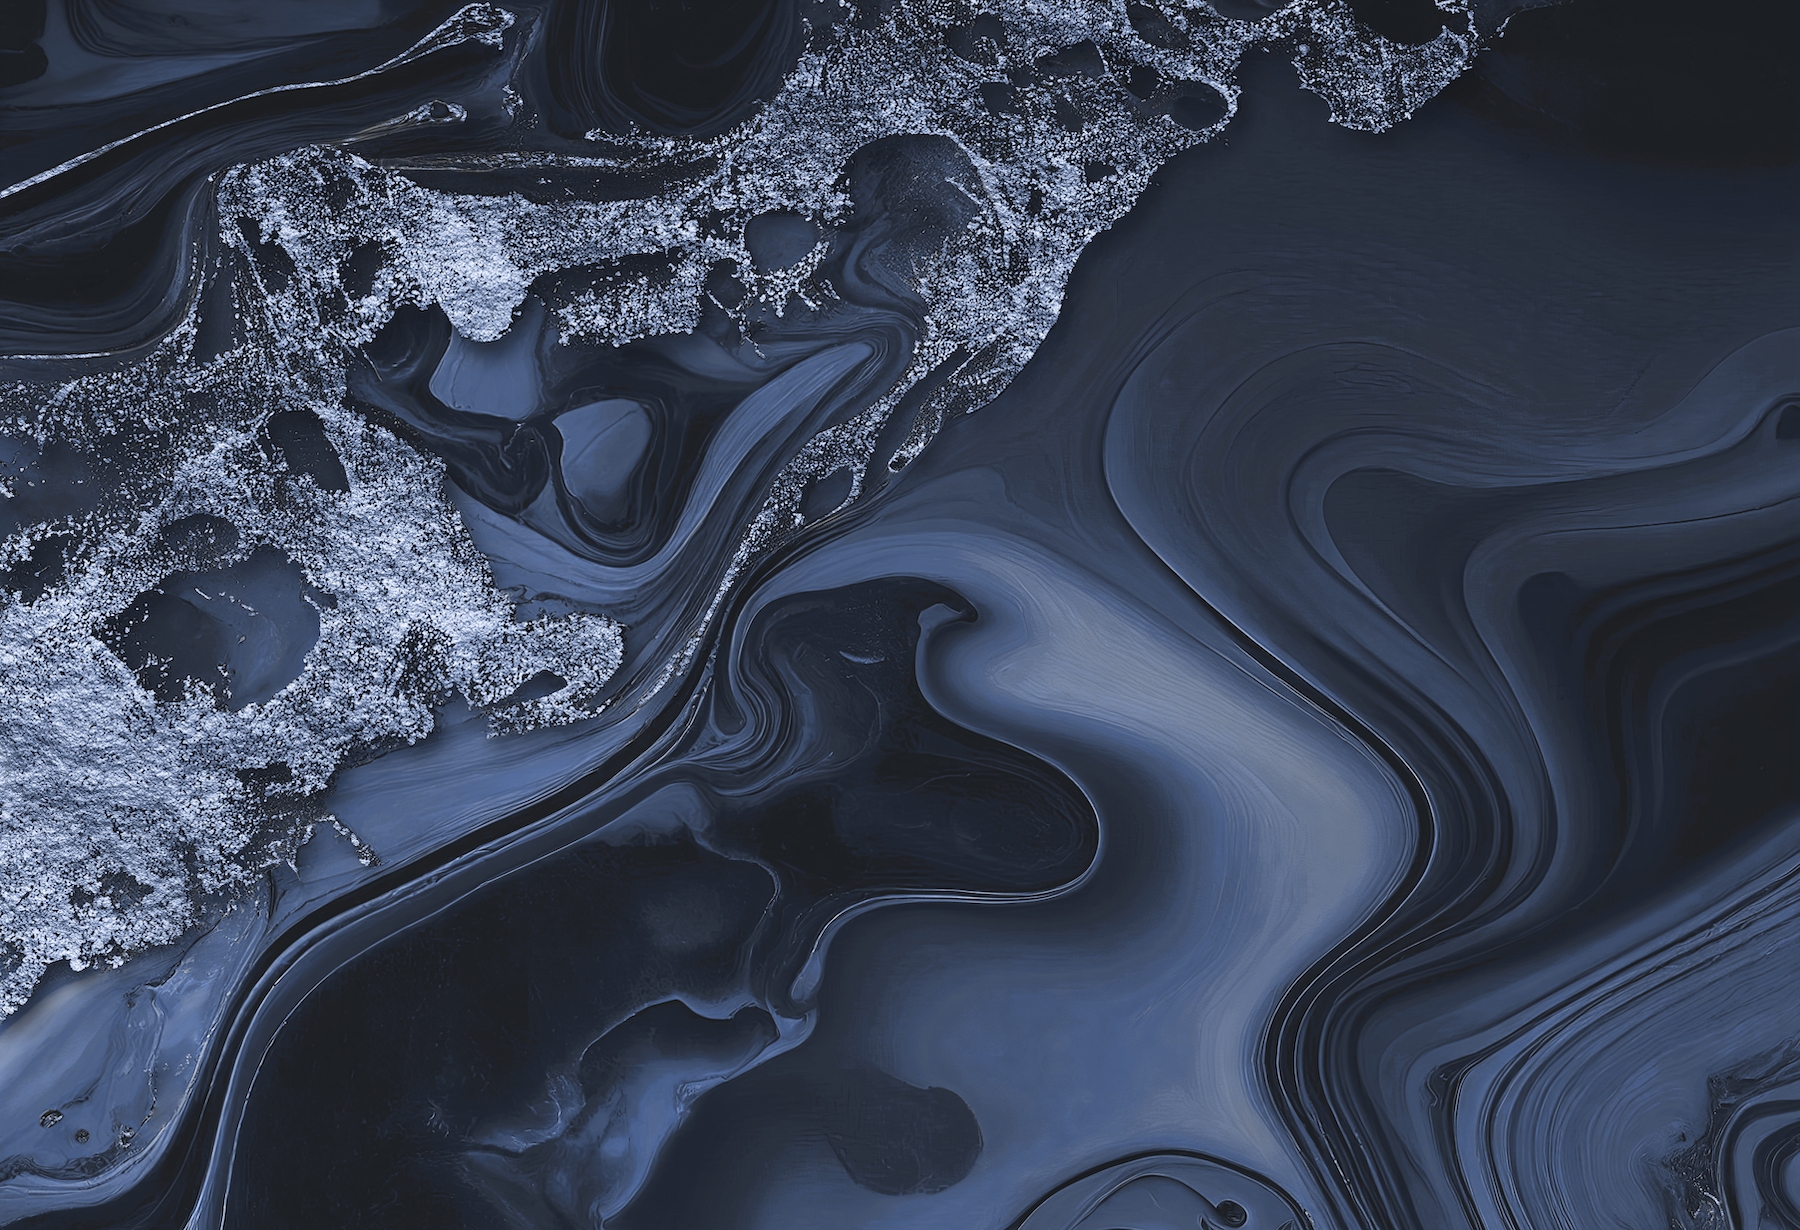 Navy Blue Glitter Simulated Look | Art Board Print